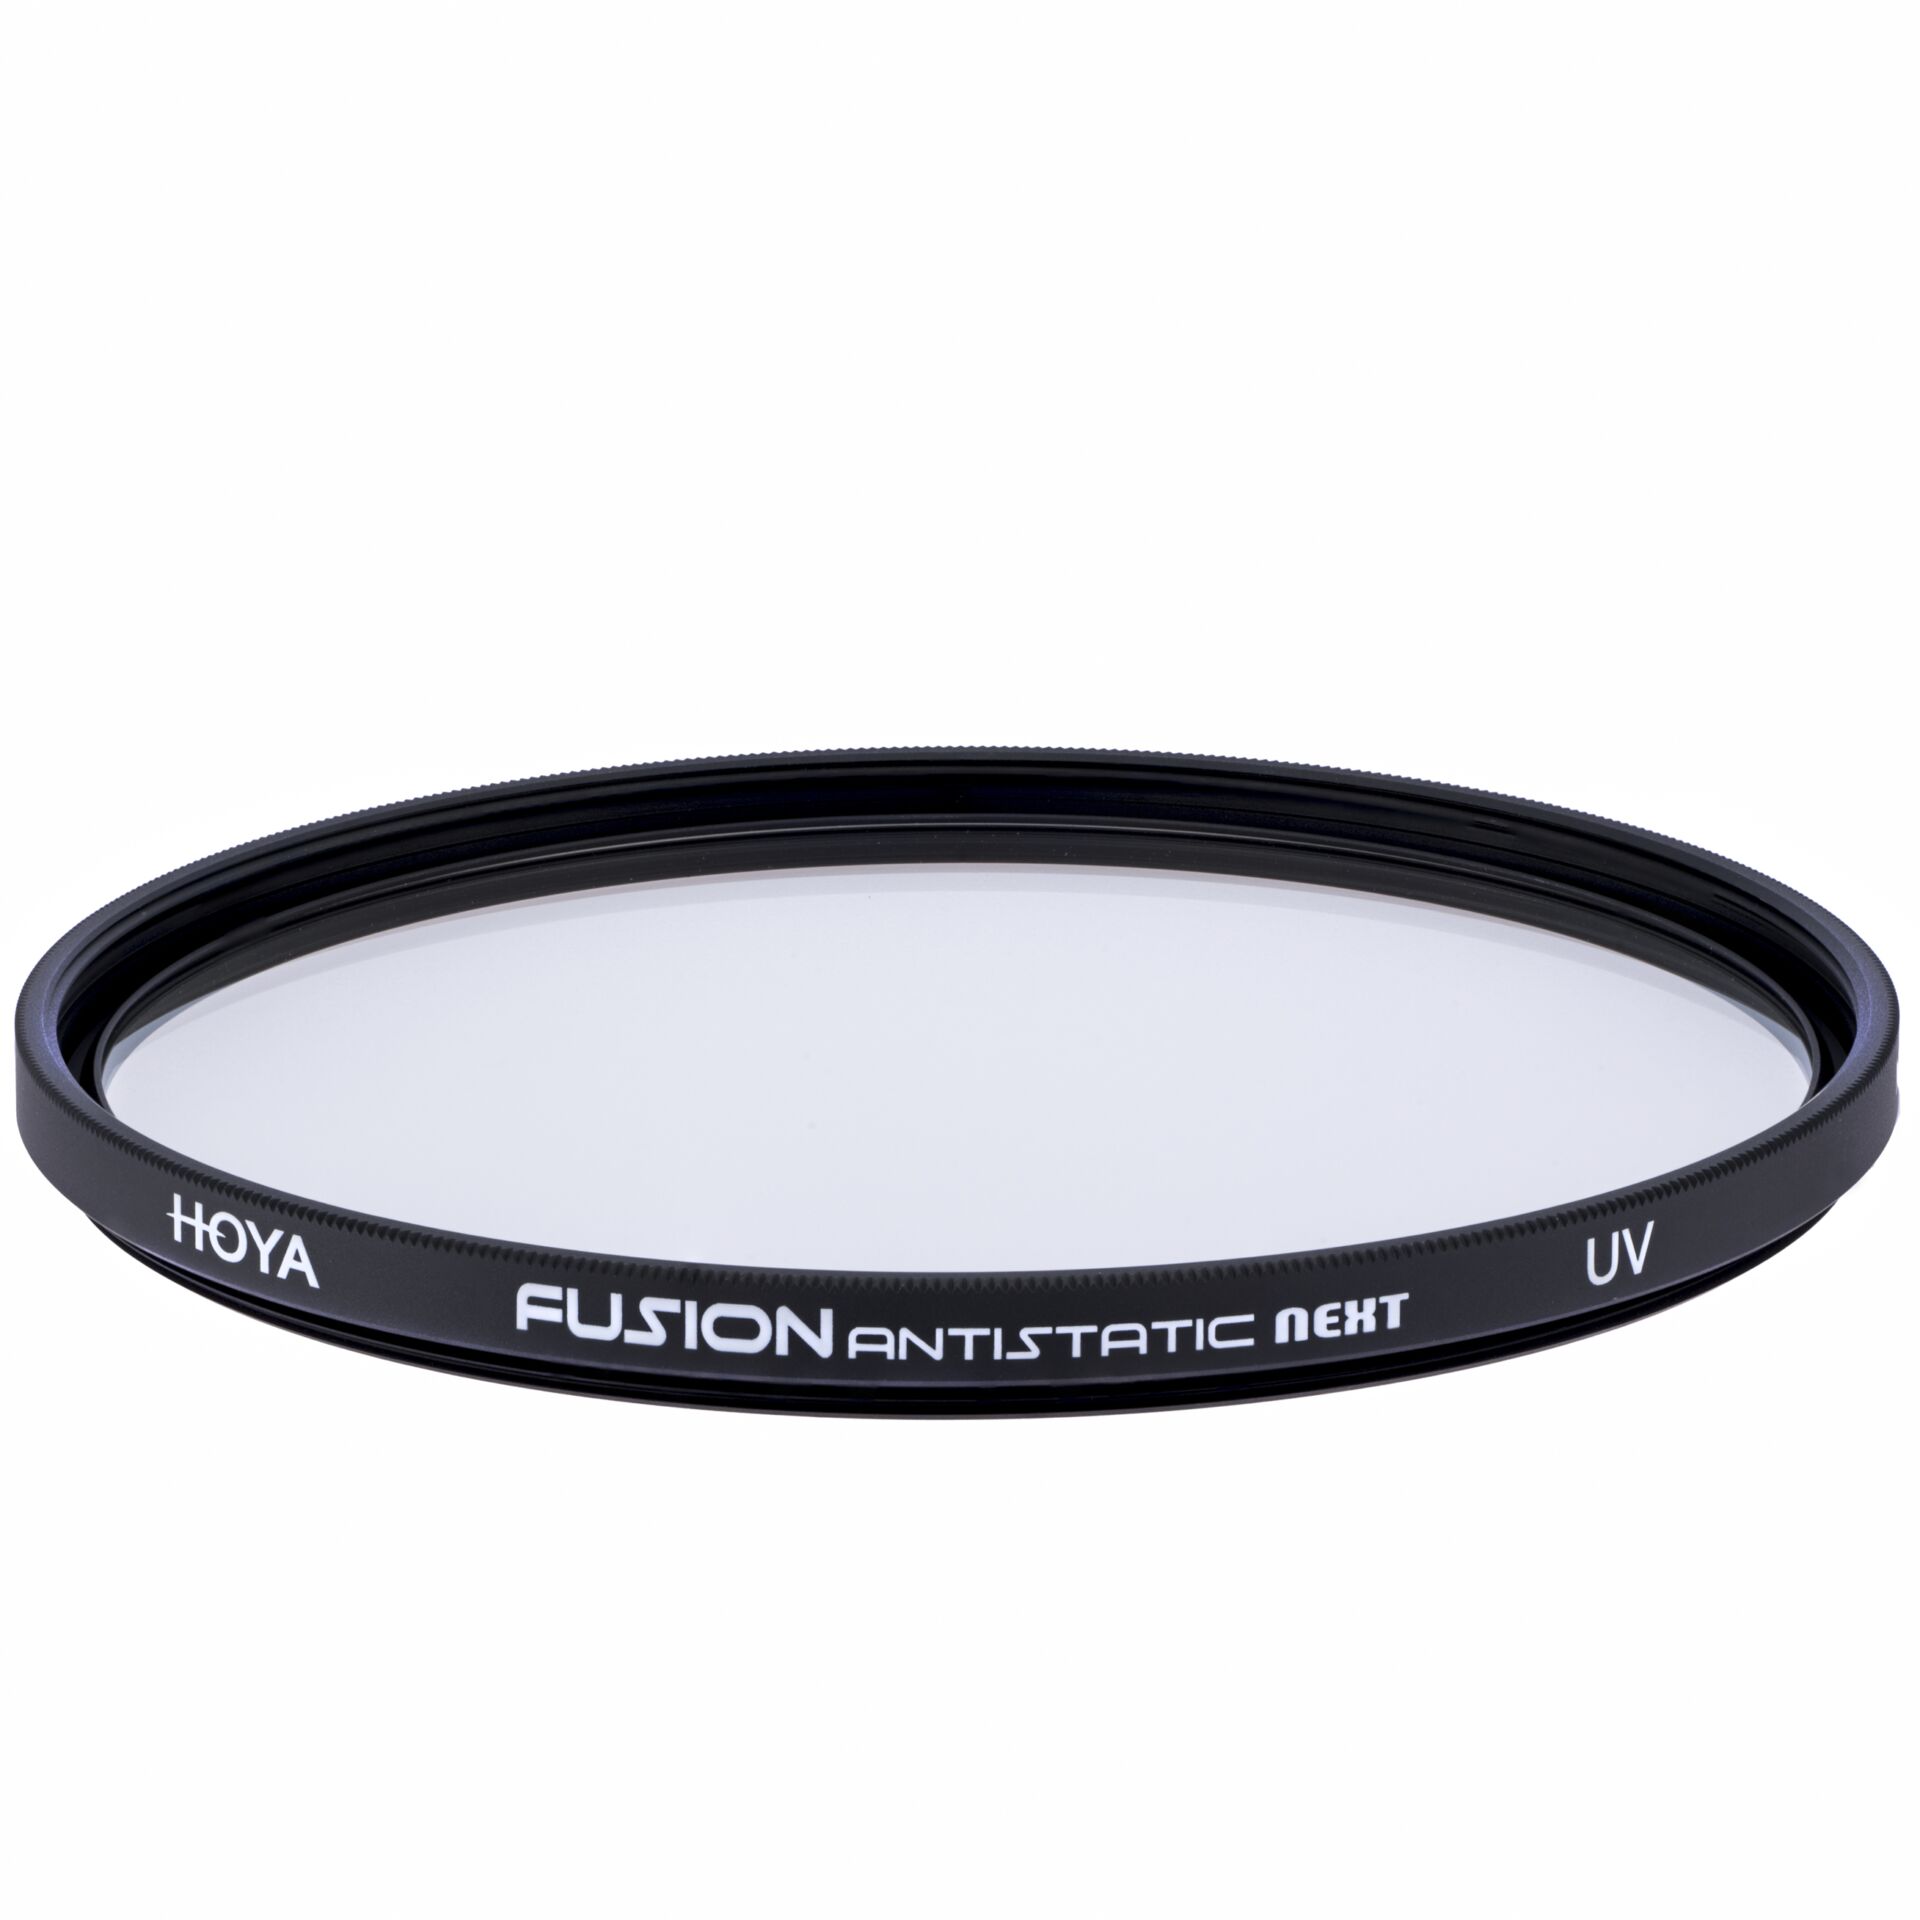 Hoya UV Fusion Antistatic NEXT 58mm